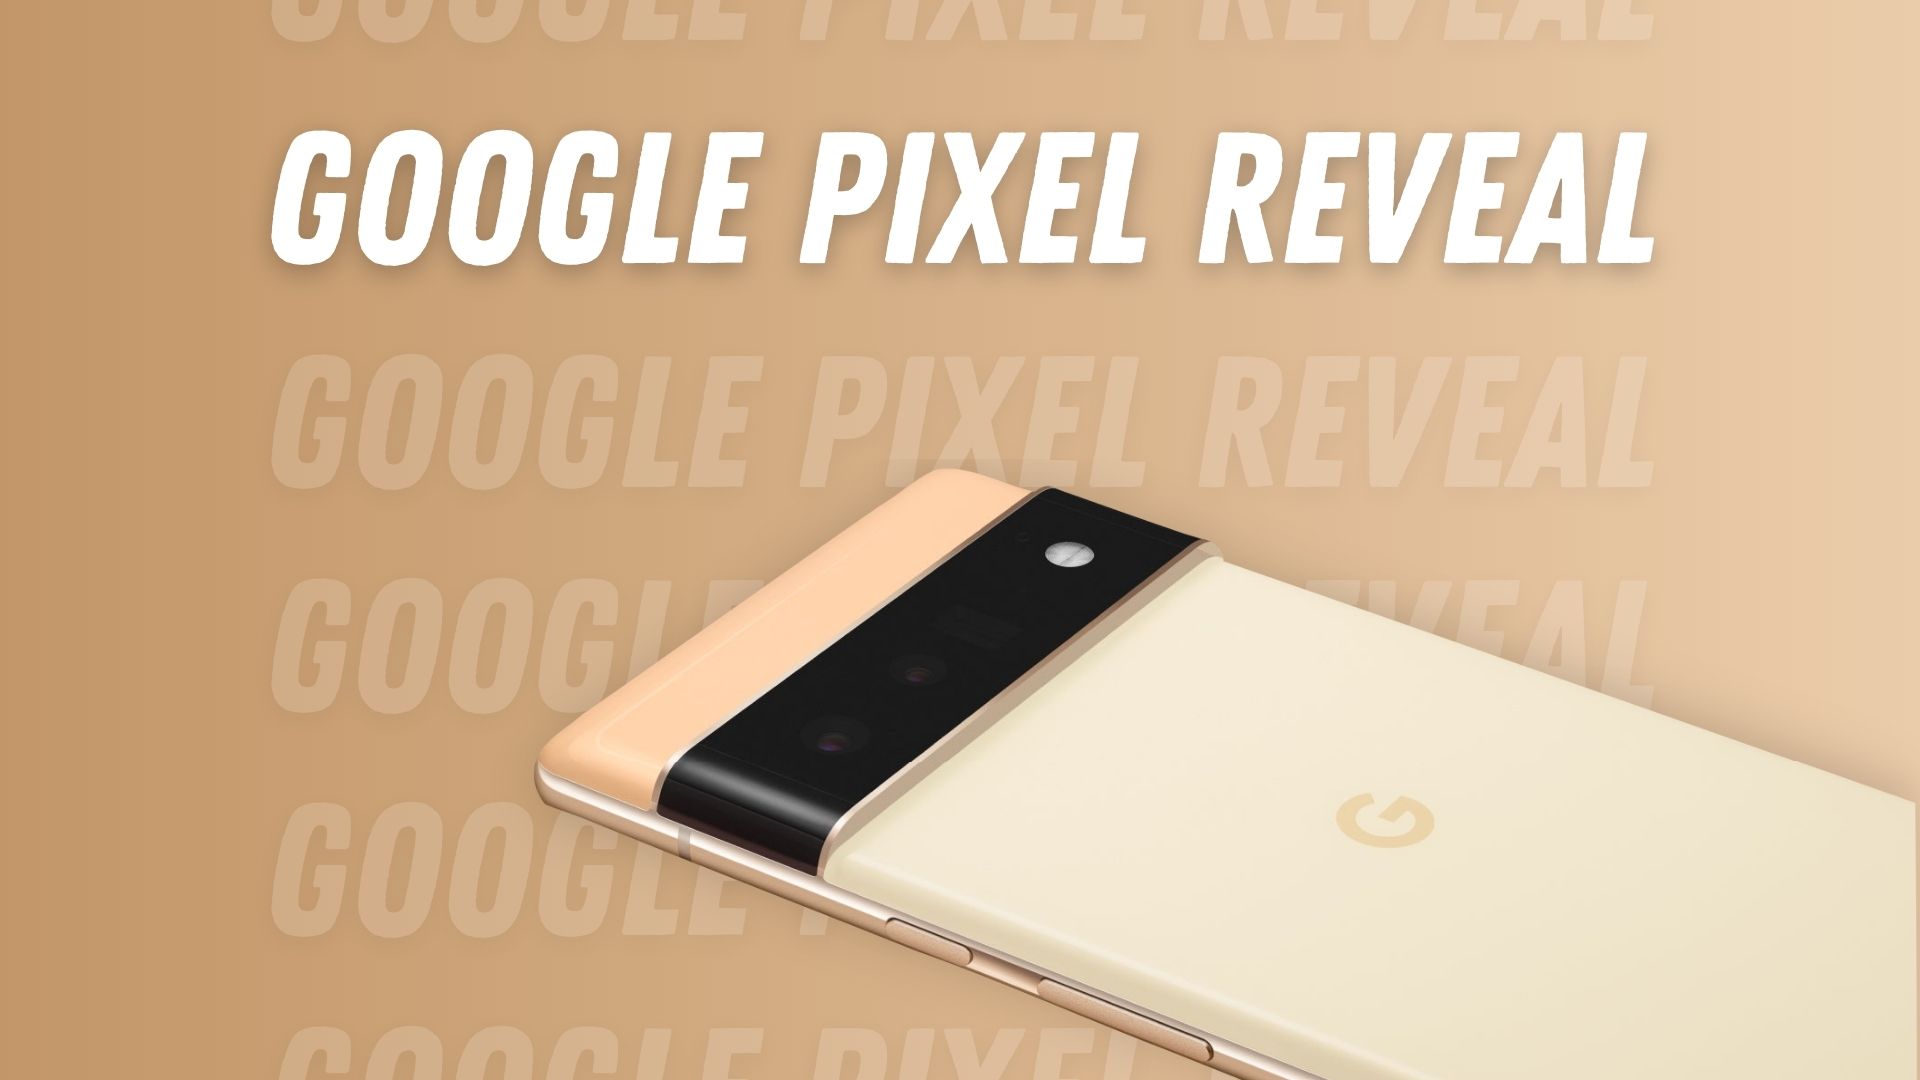 Google Pixel Reveal launch event on Oc 19 Watch here TrueTech True-Tech